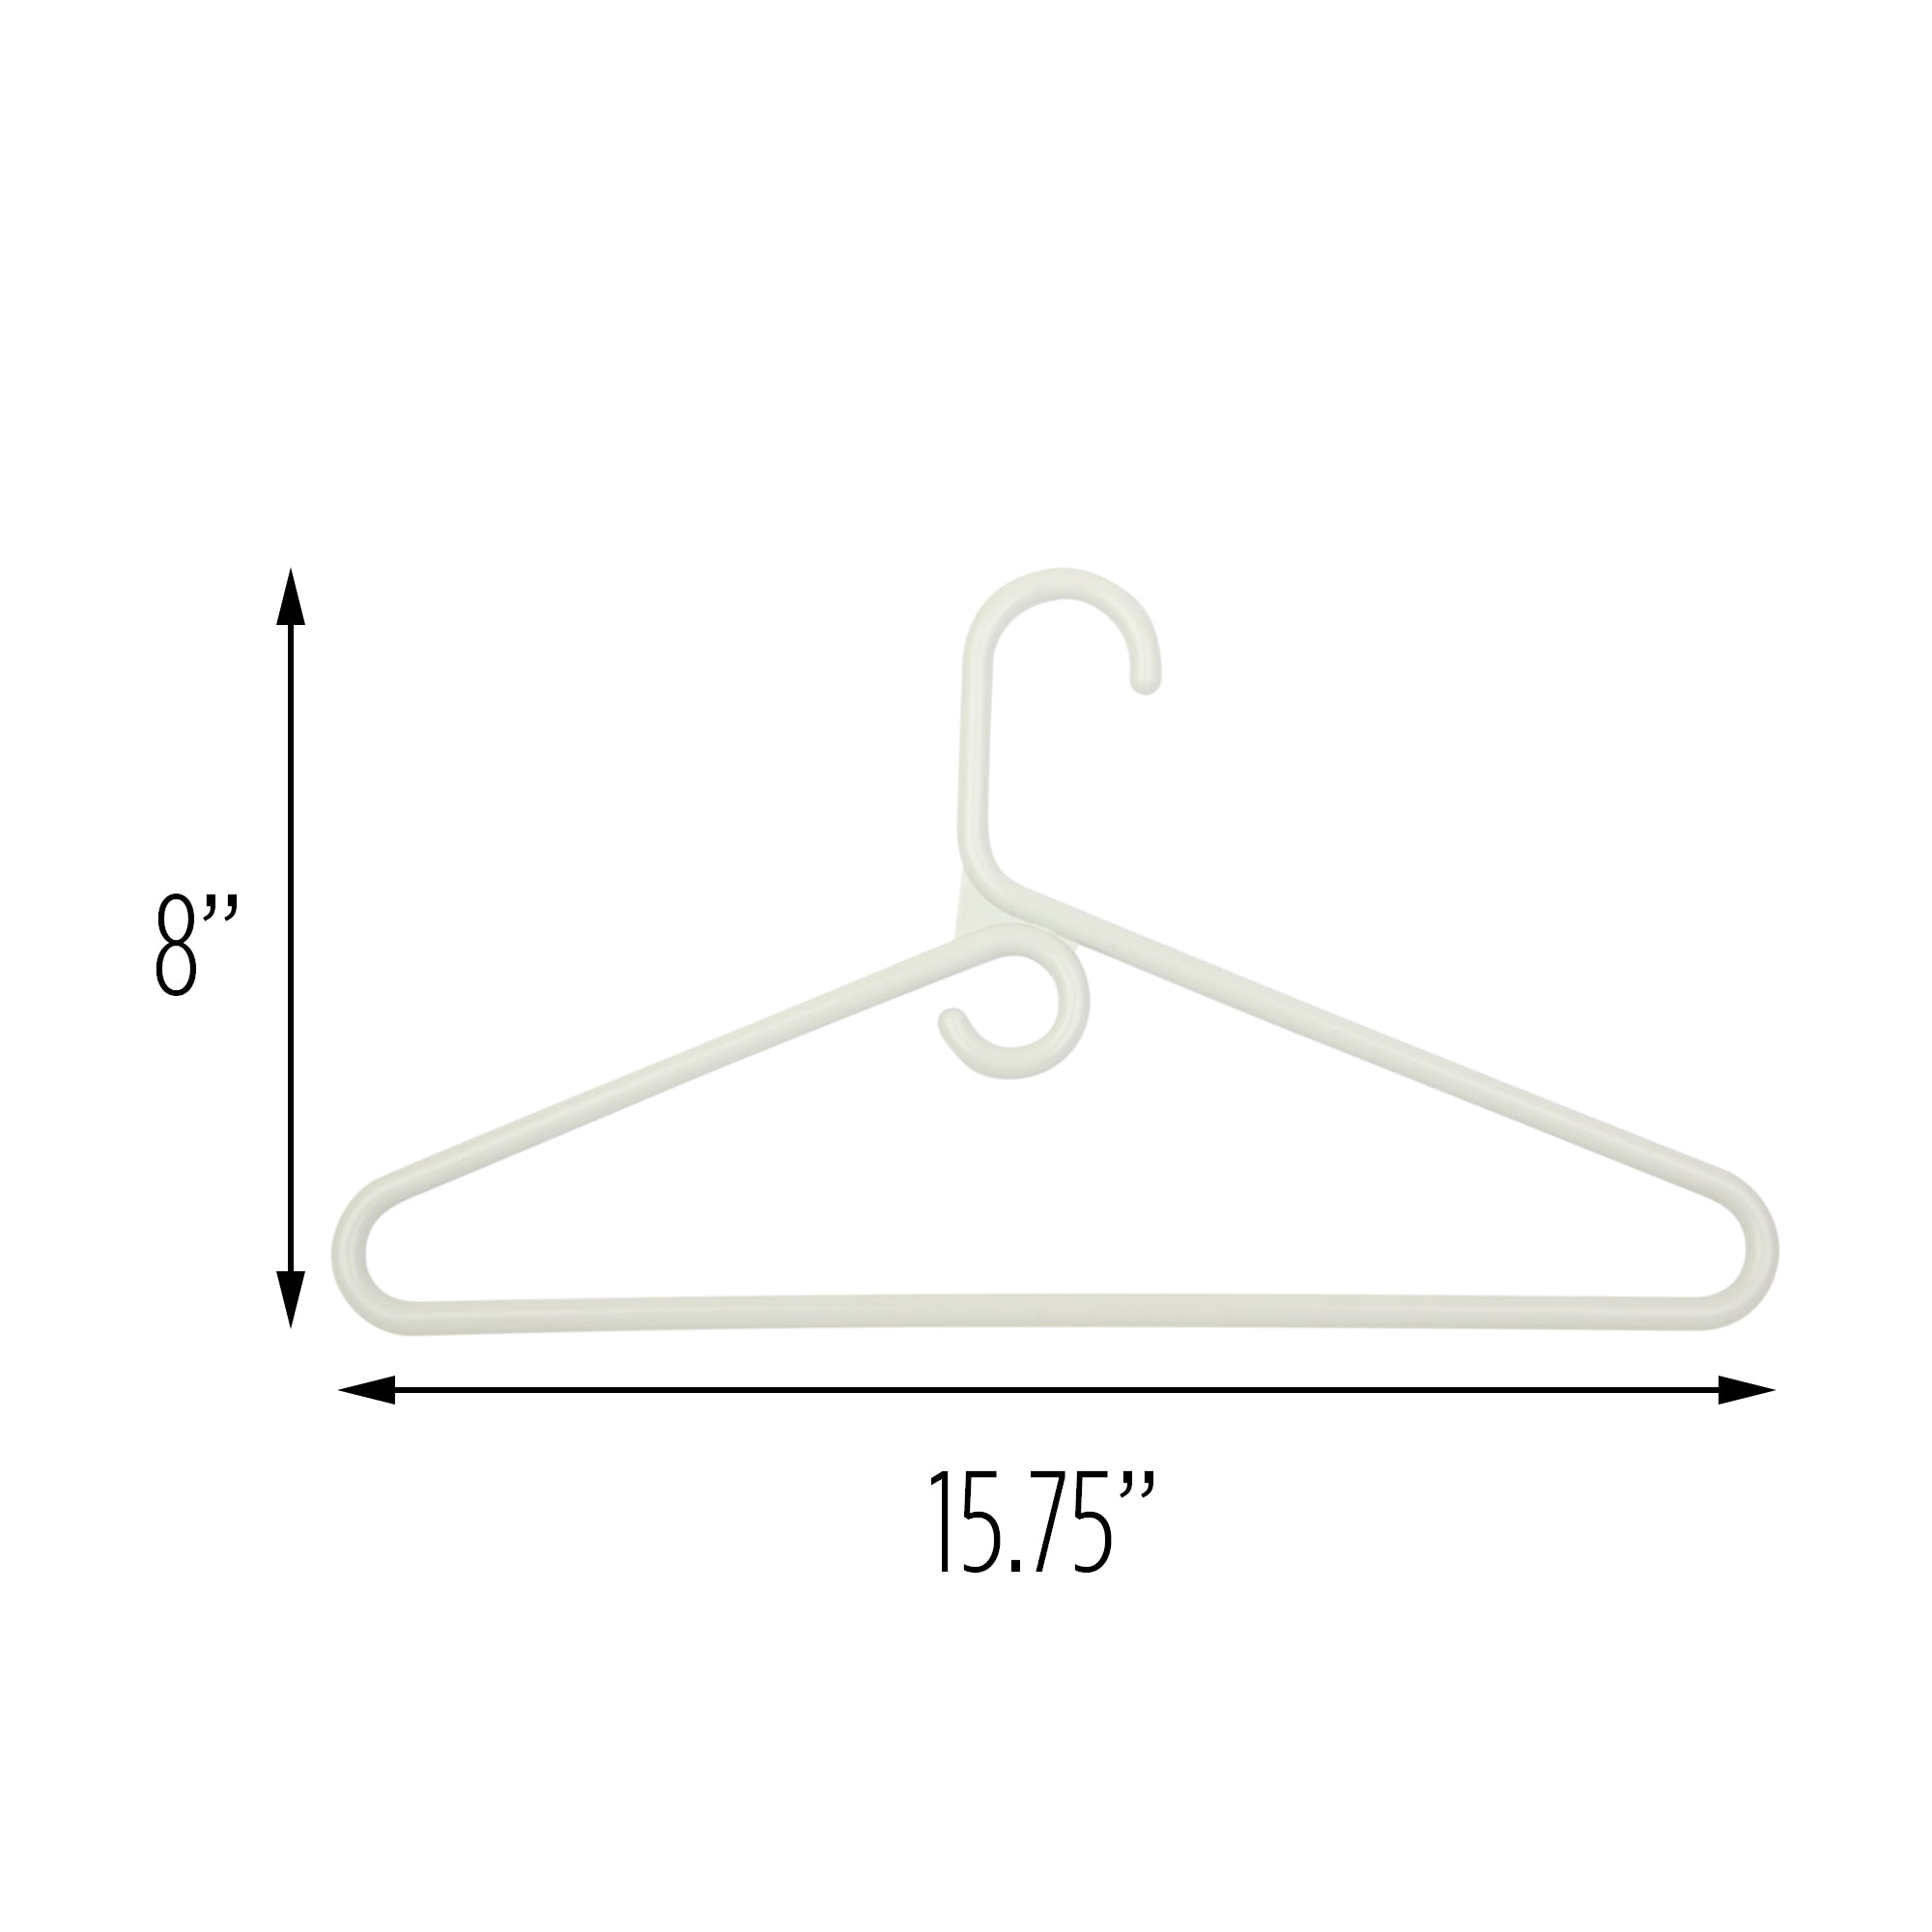 16 3/8 White Tubular Plastic Hanger W/Notches